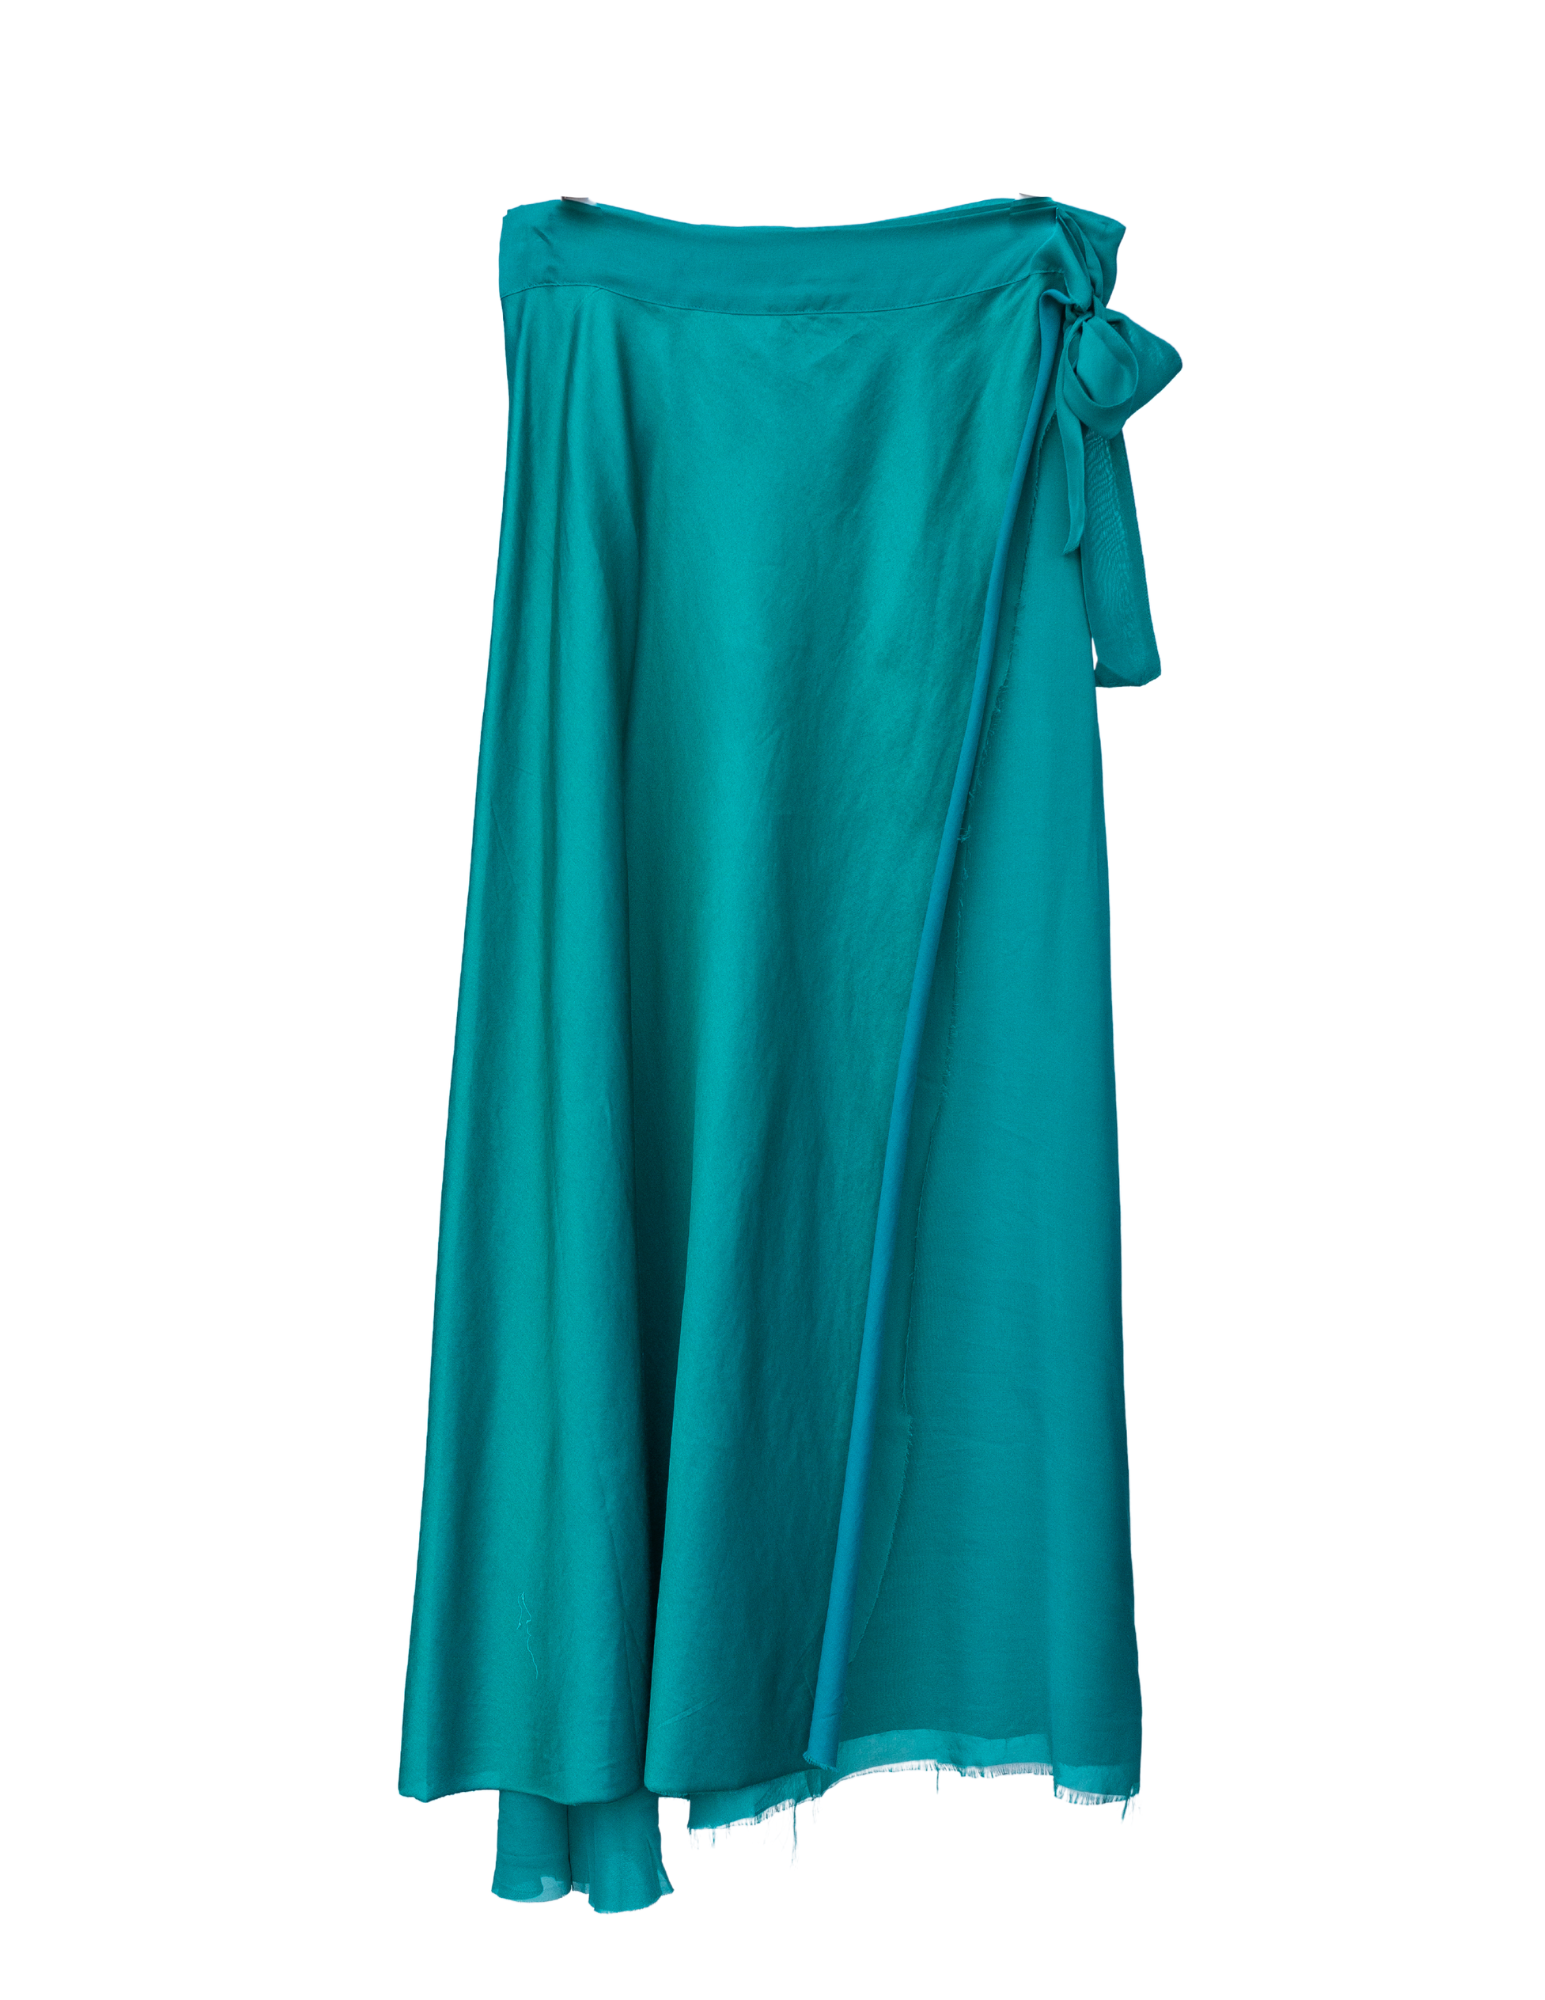 Magnolia Wrap Skirt - Paris Green